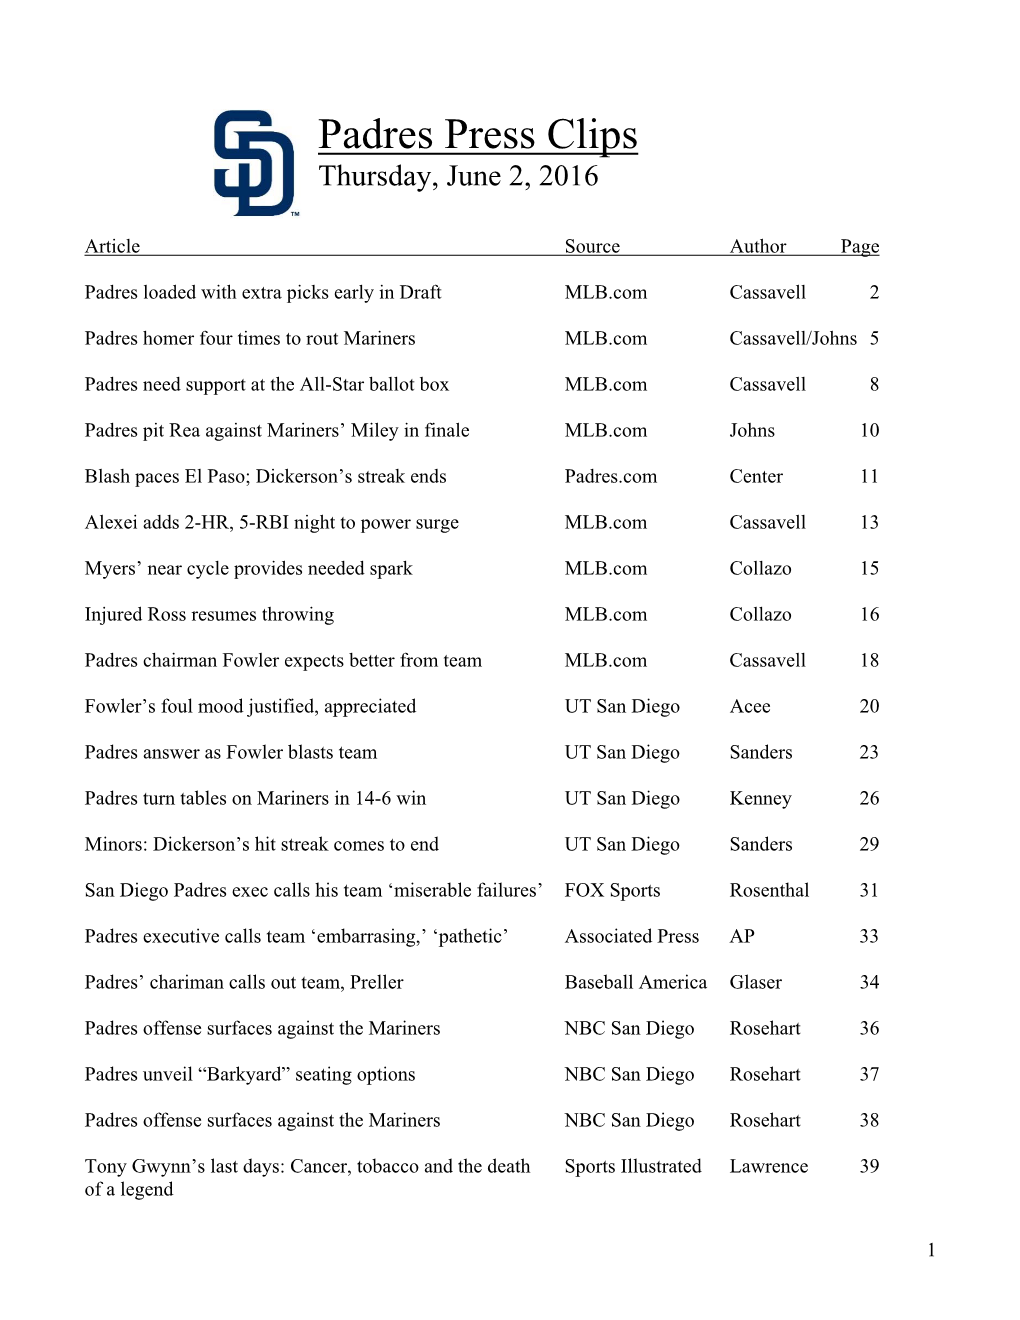 Padres Press Clips Thursday, June 2, 2016